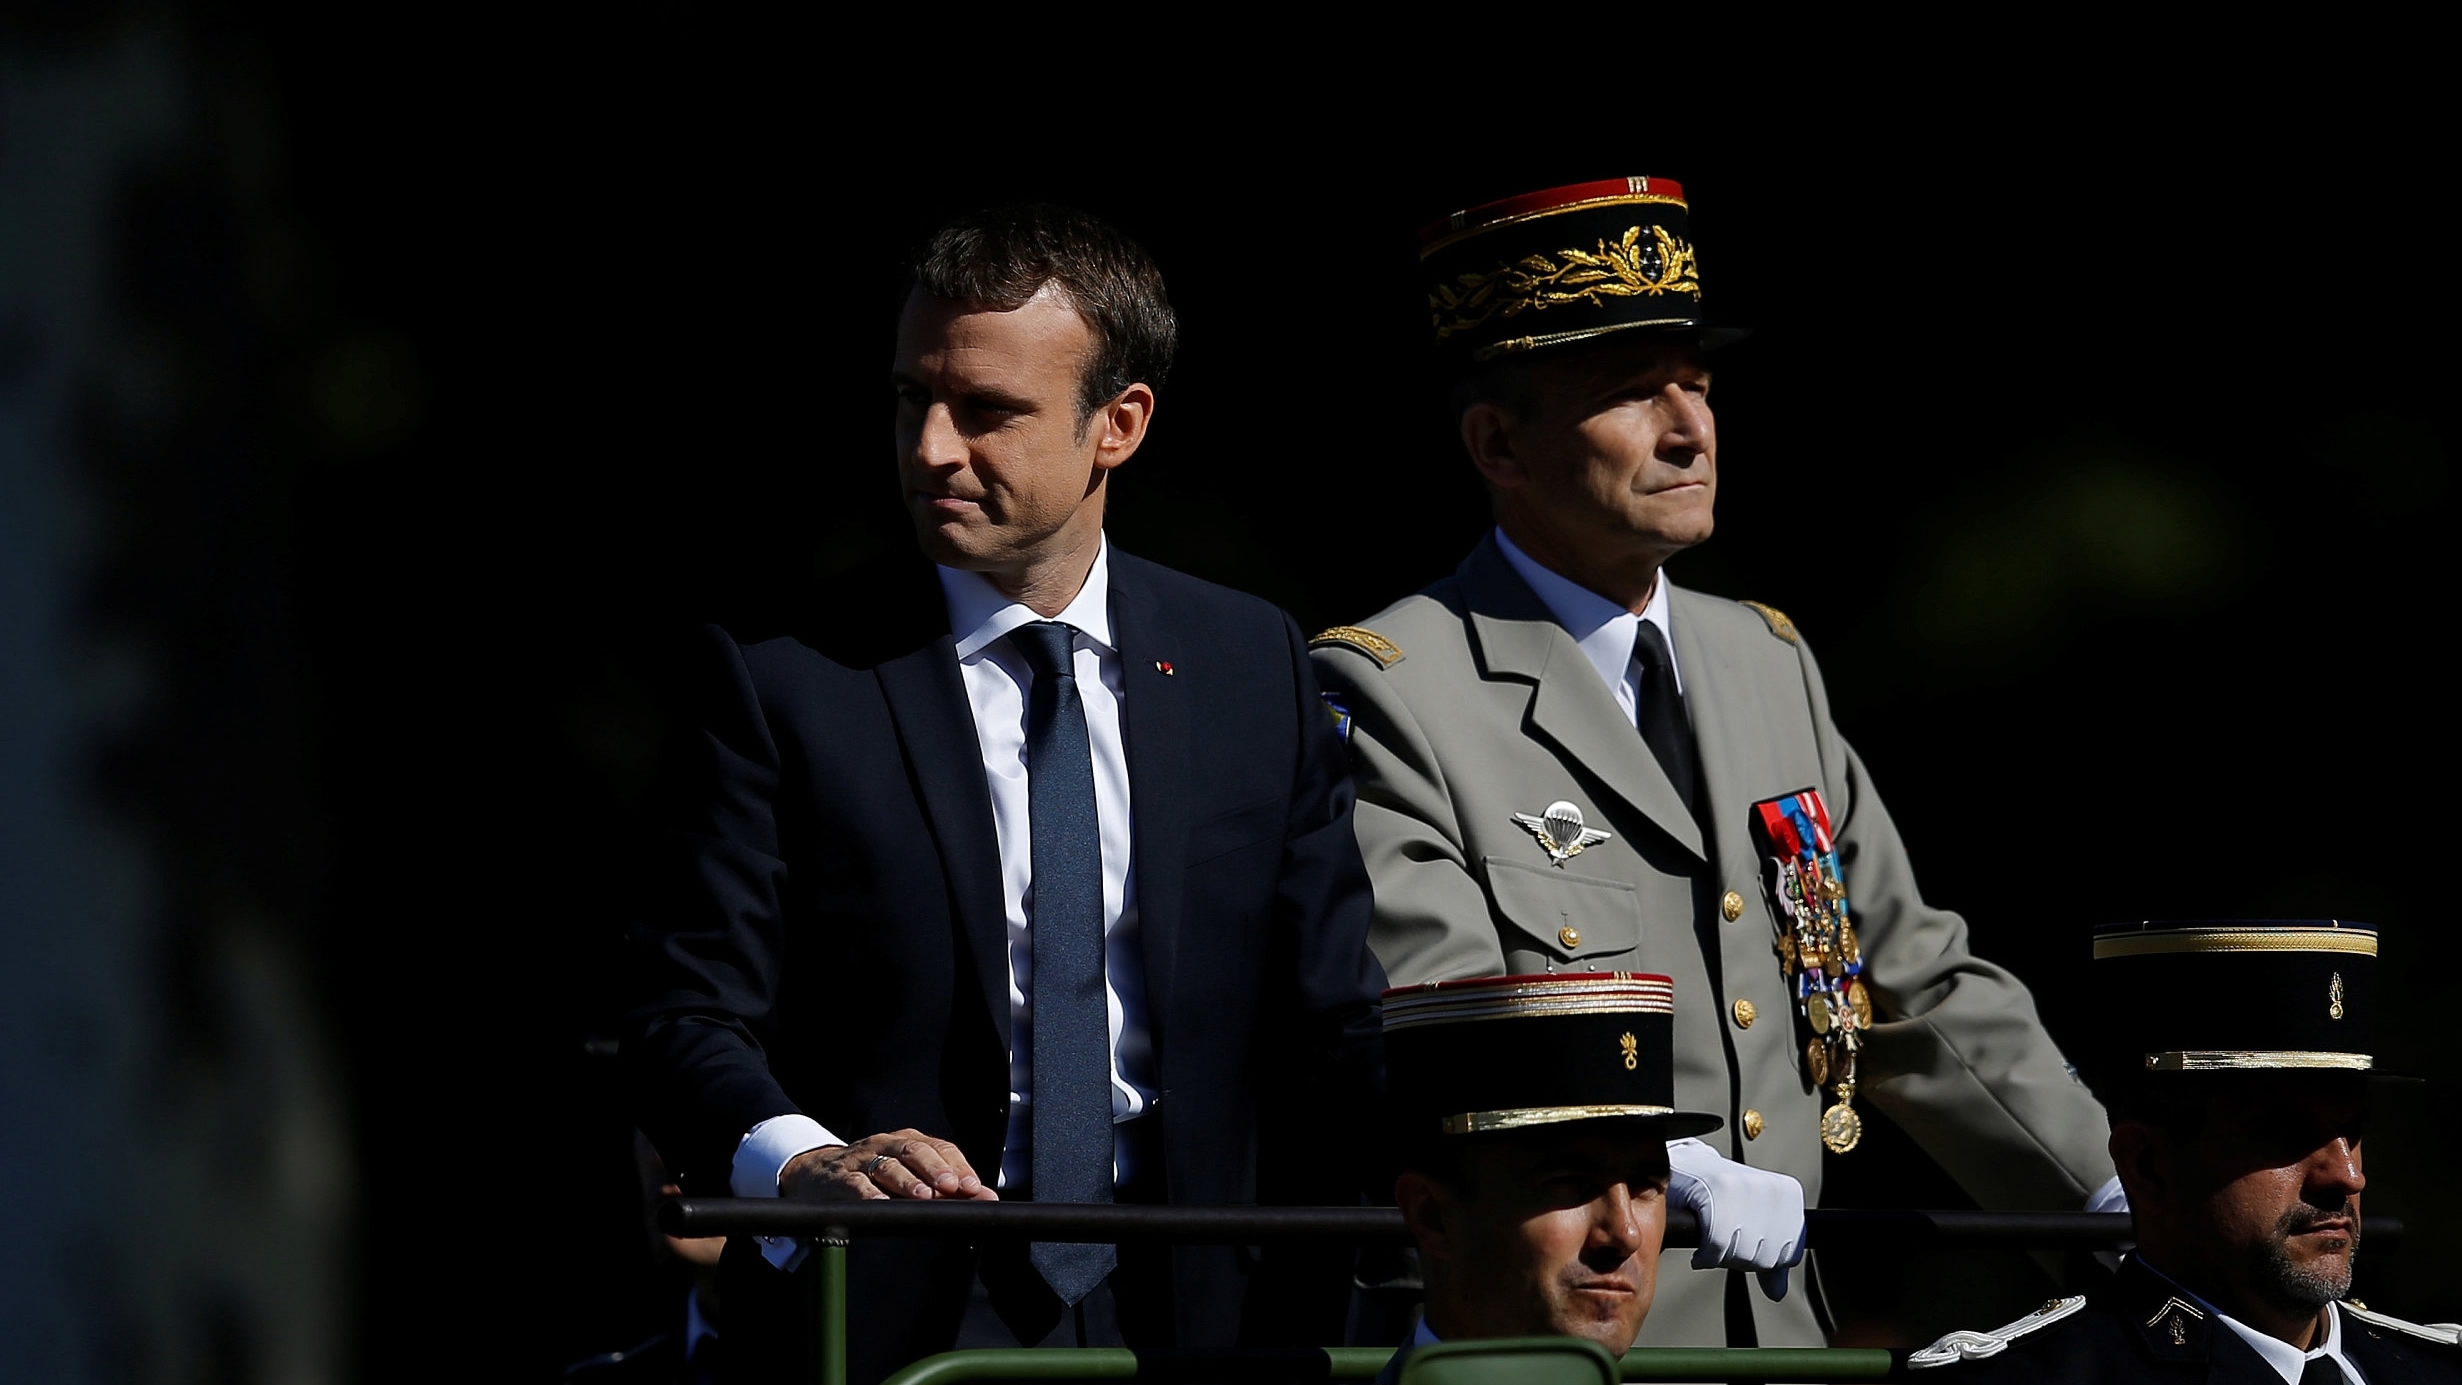 Macron slumps in polls as realities of office bite